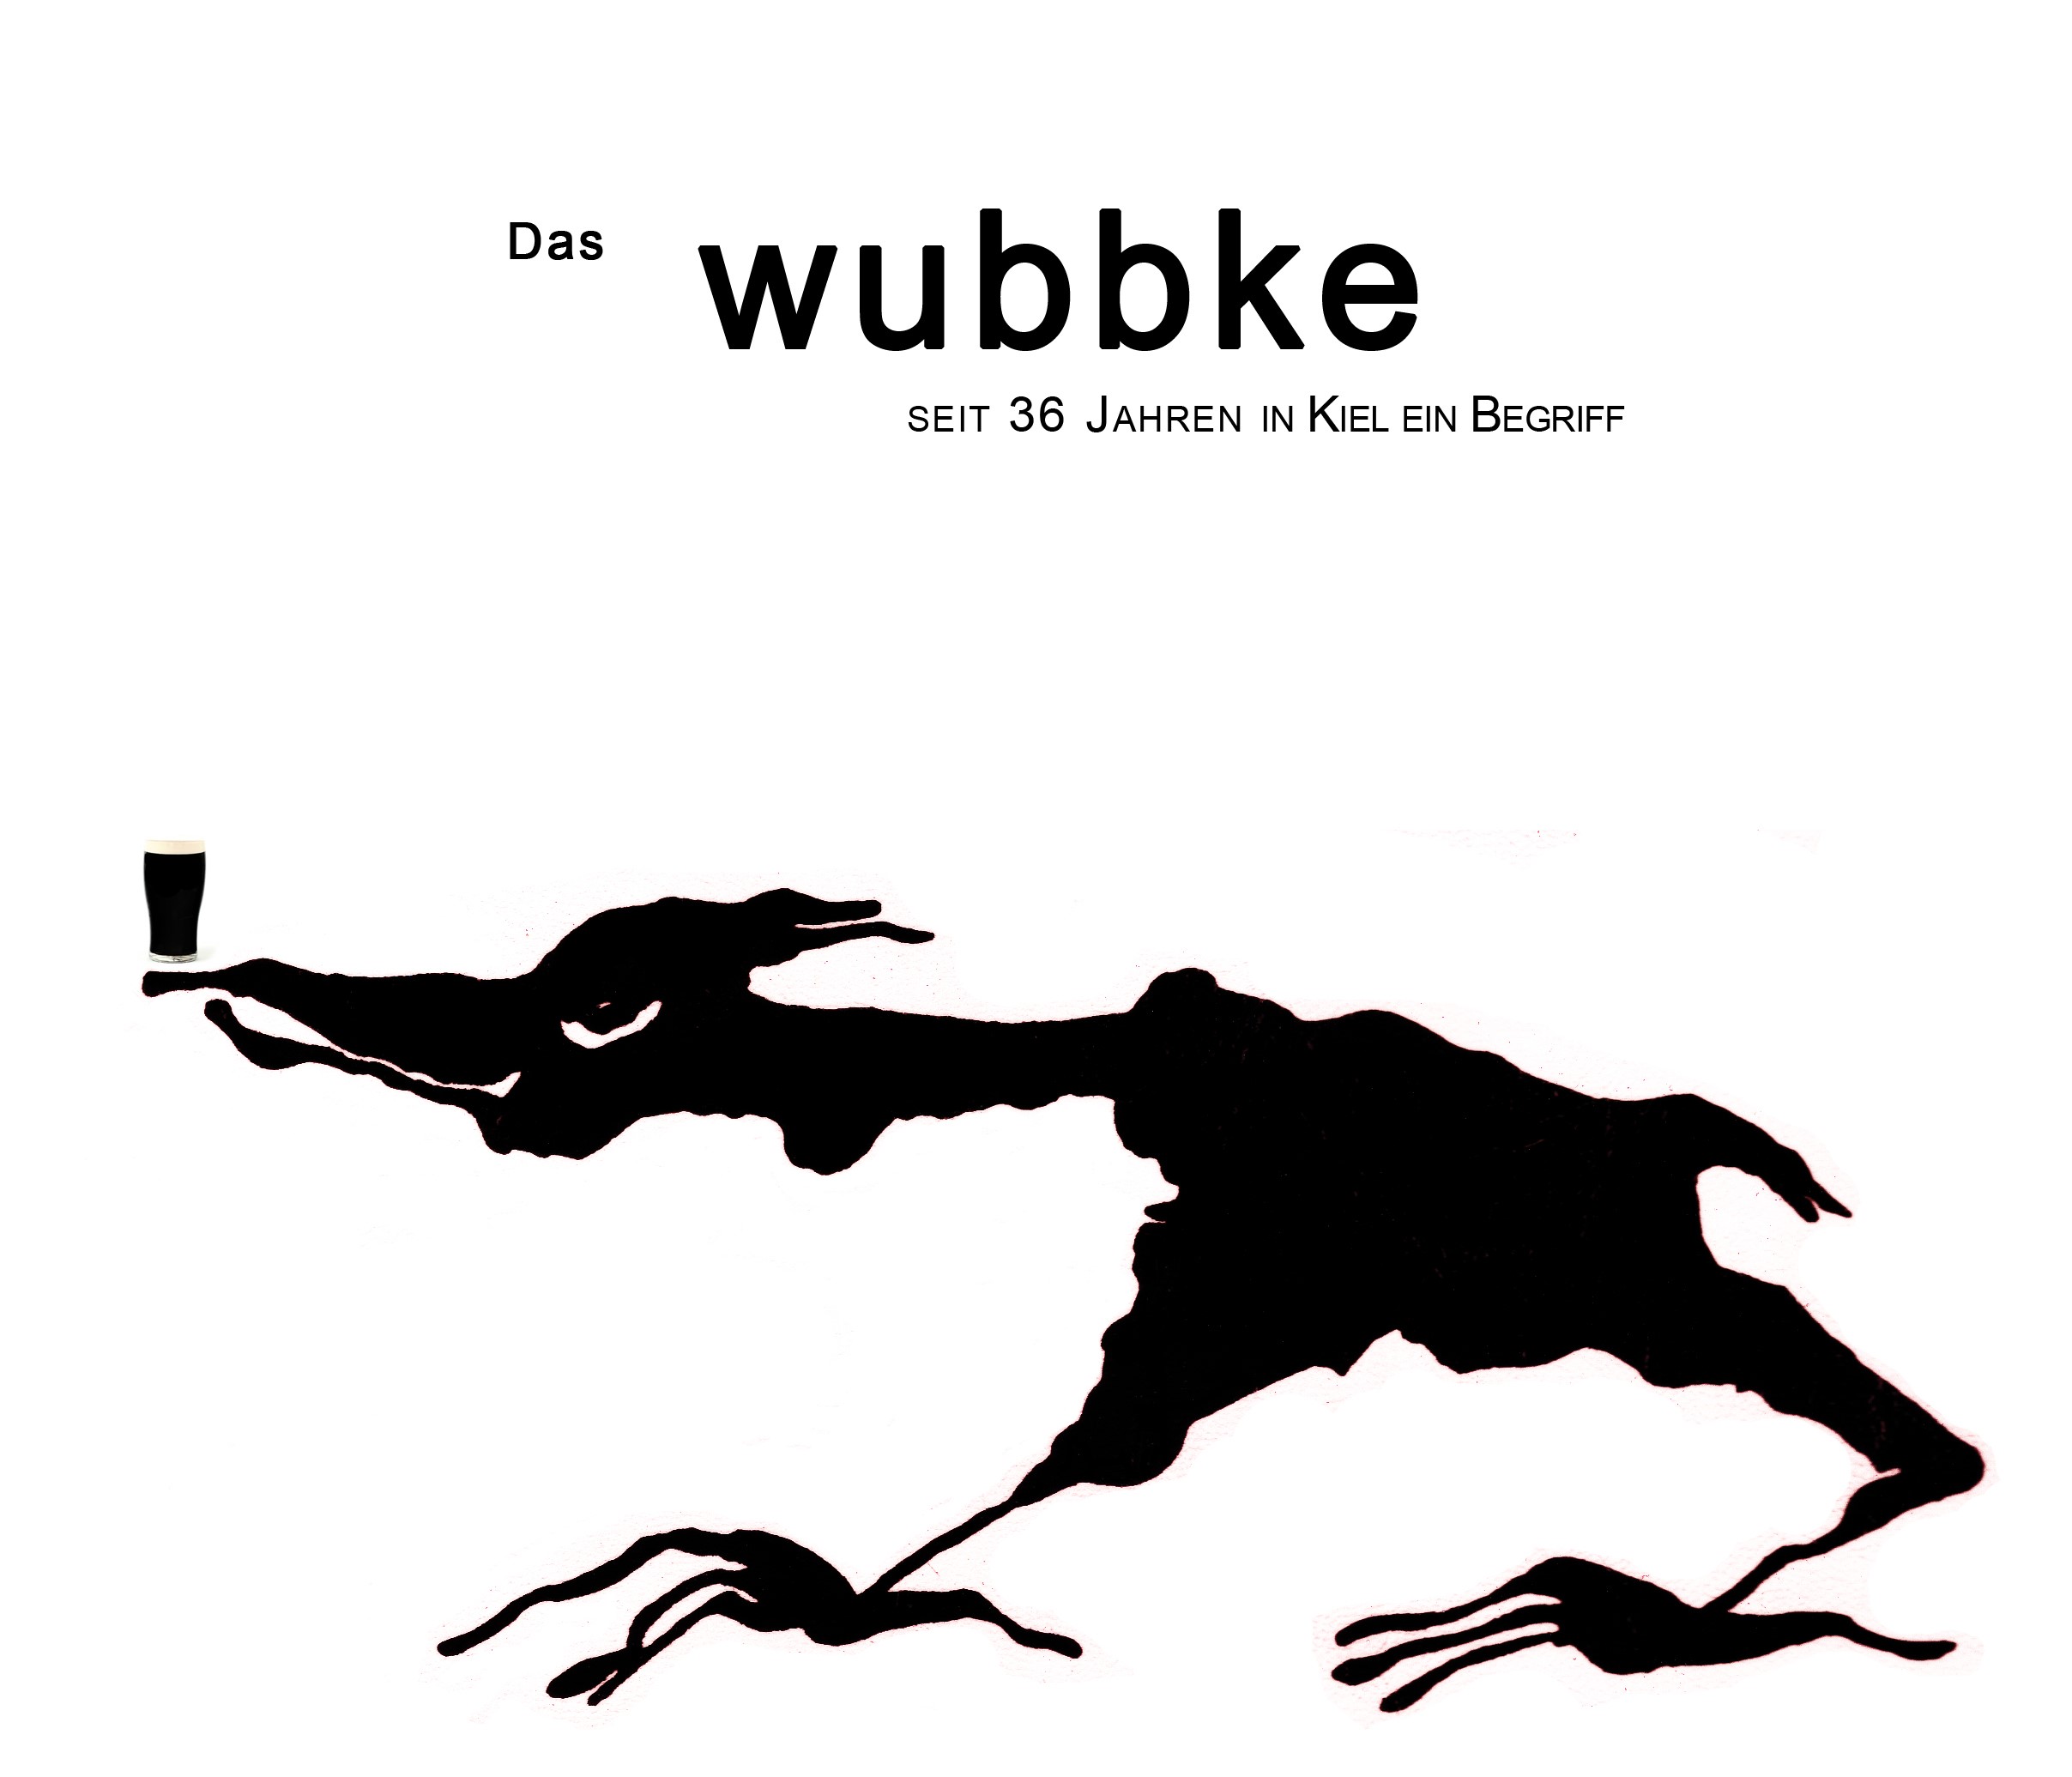 Wubbke